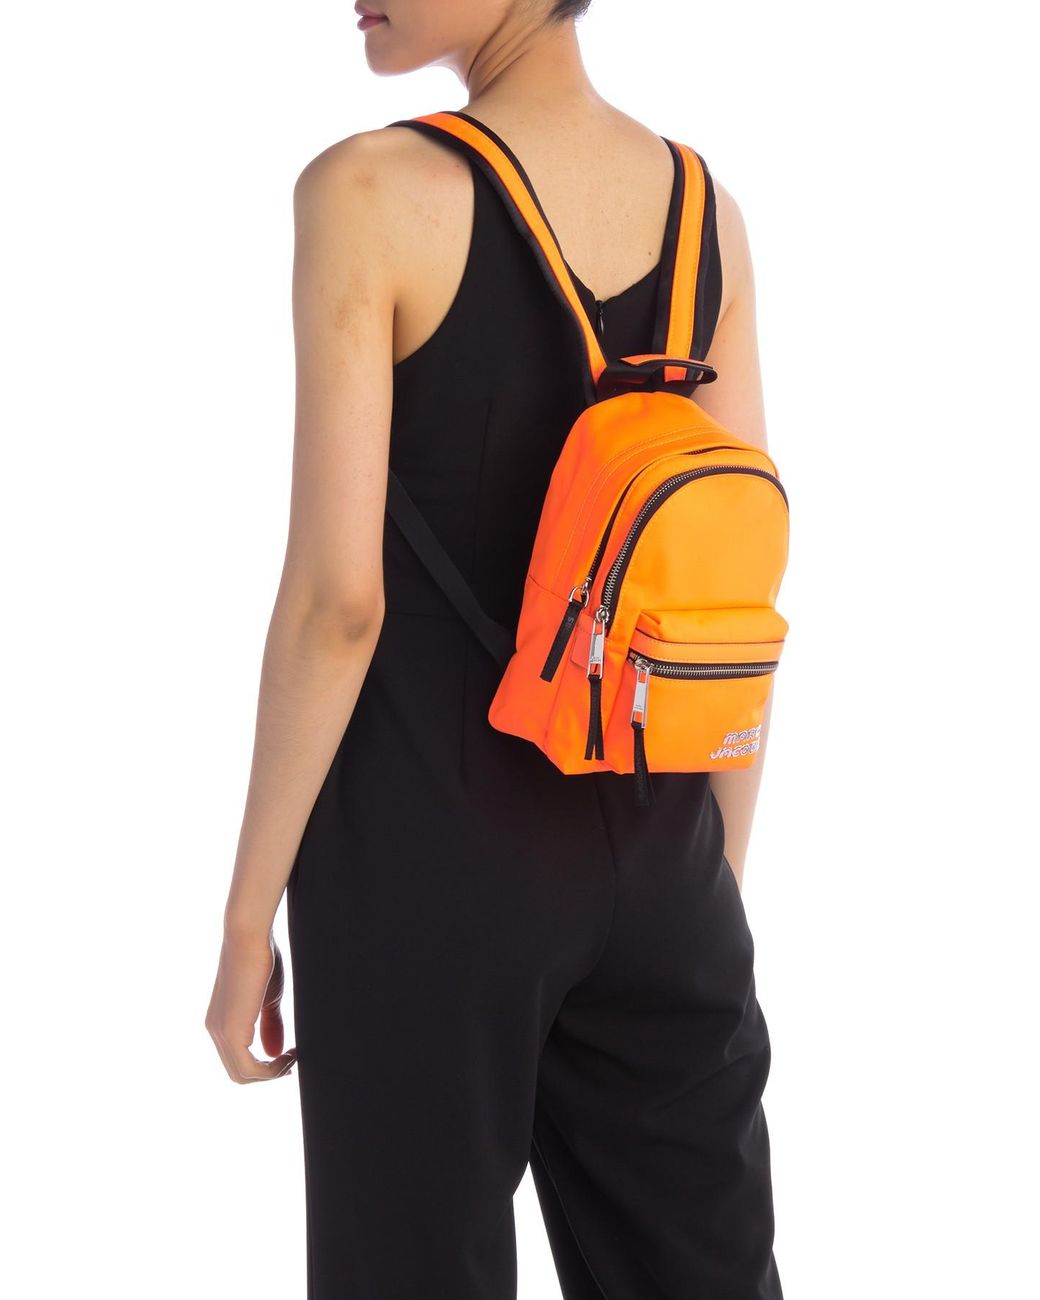 Marc Jacobs Trek Mini Backpack in Black